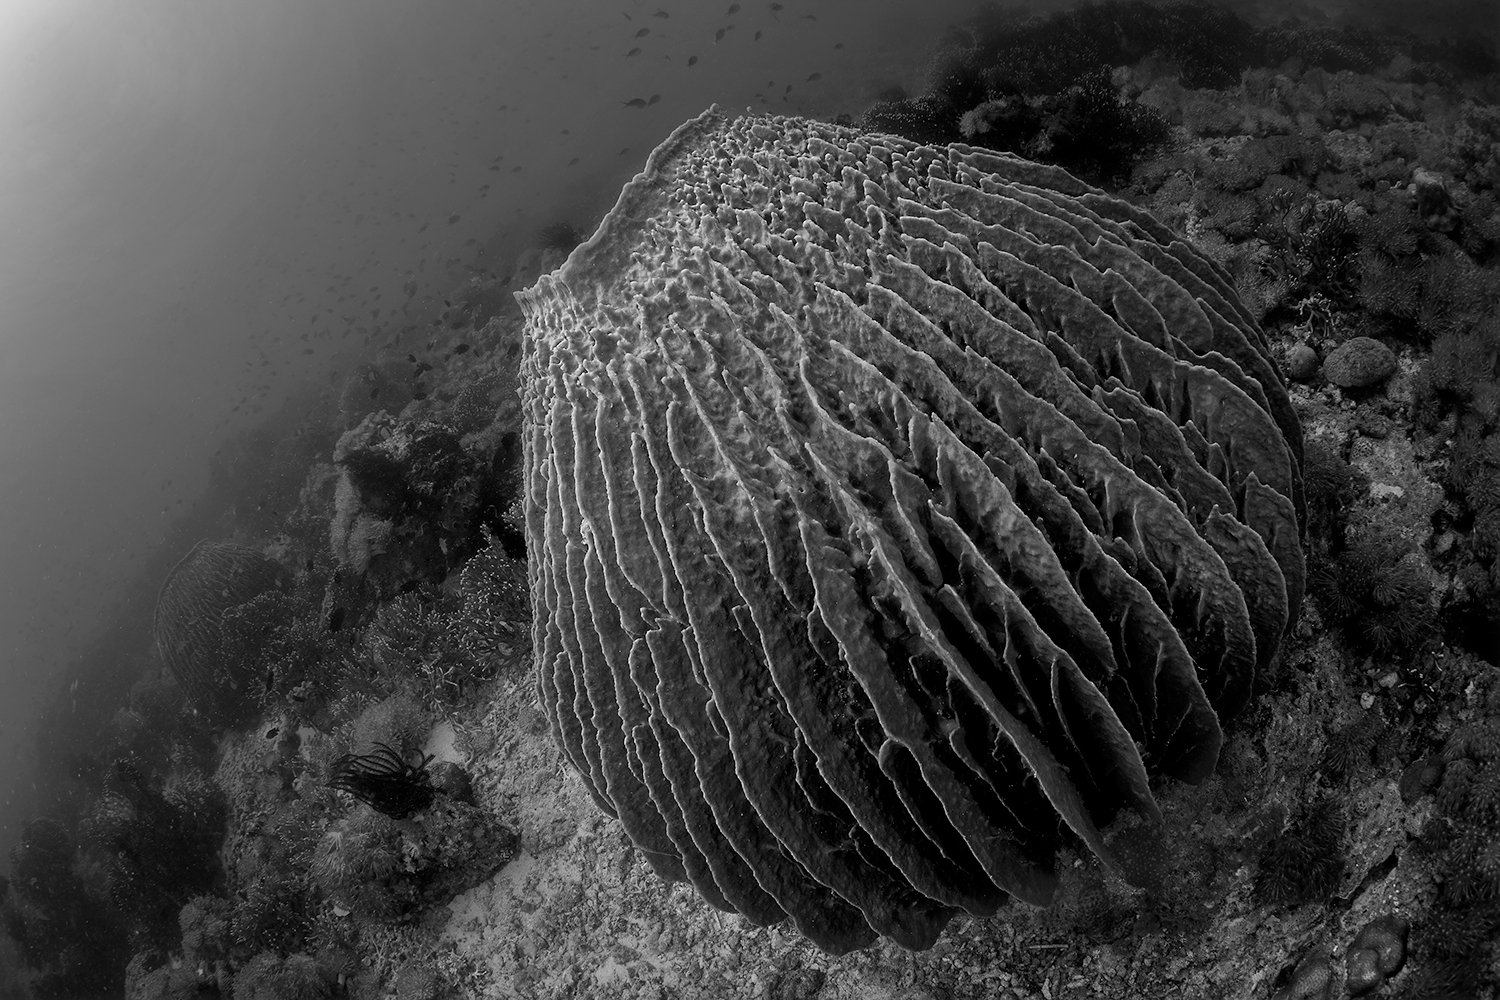  Barrel Sponge, 2013 Bali, Indonesia 